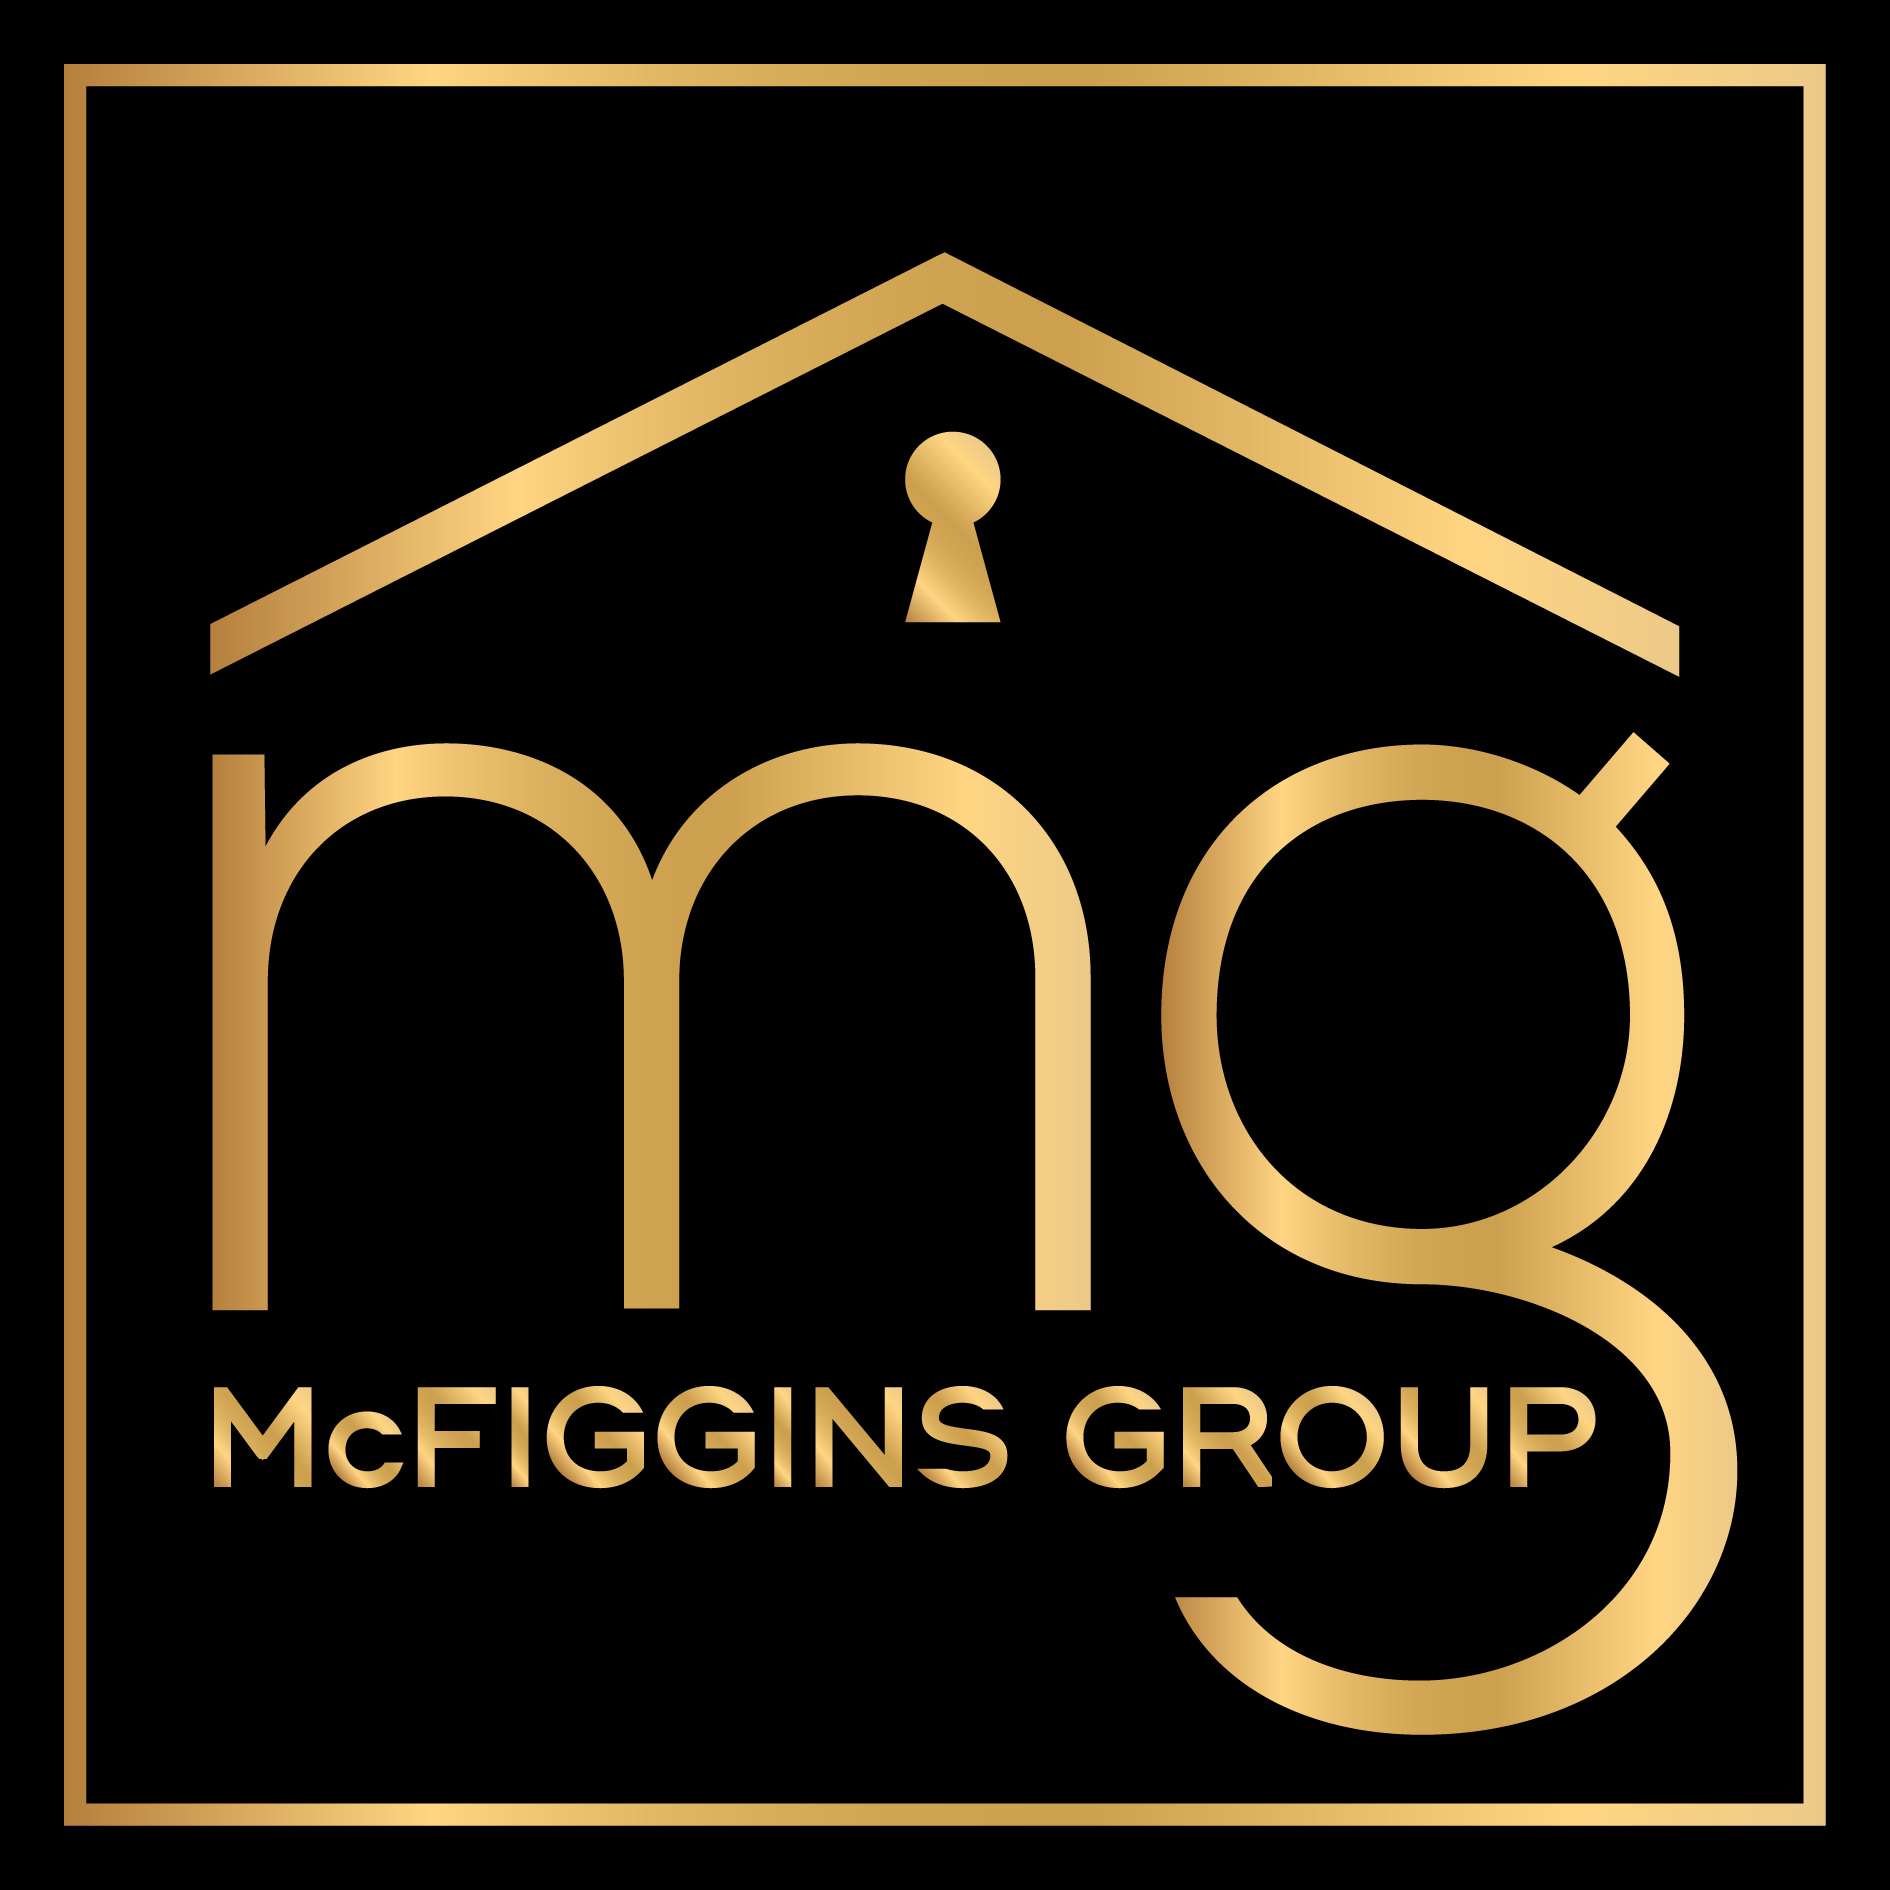 The McFiggins Group